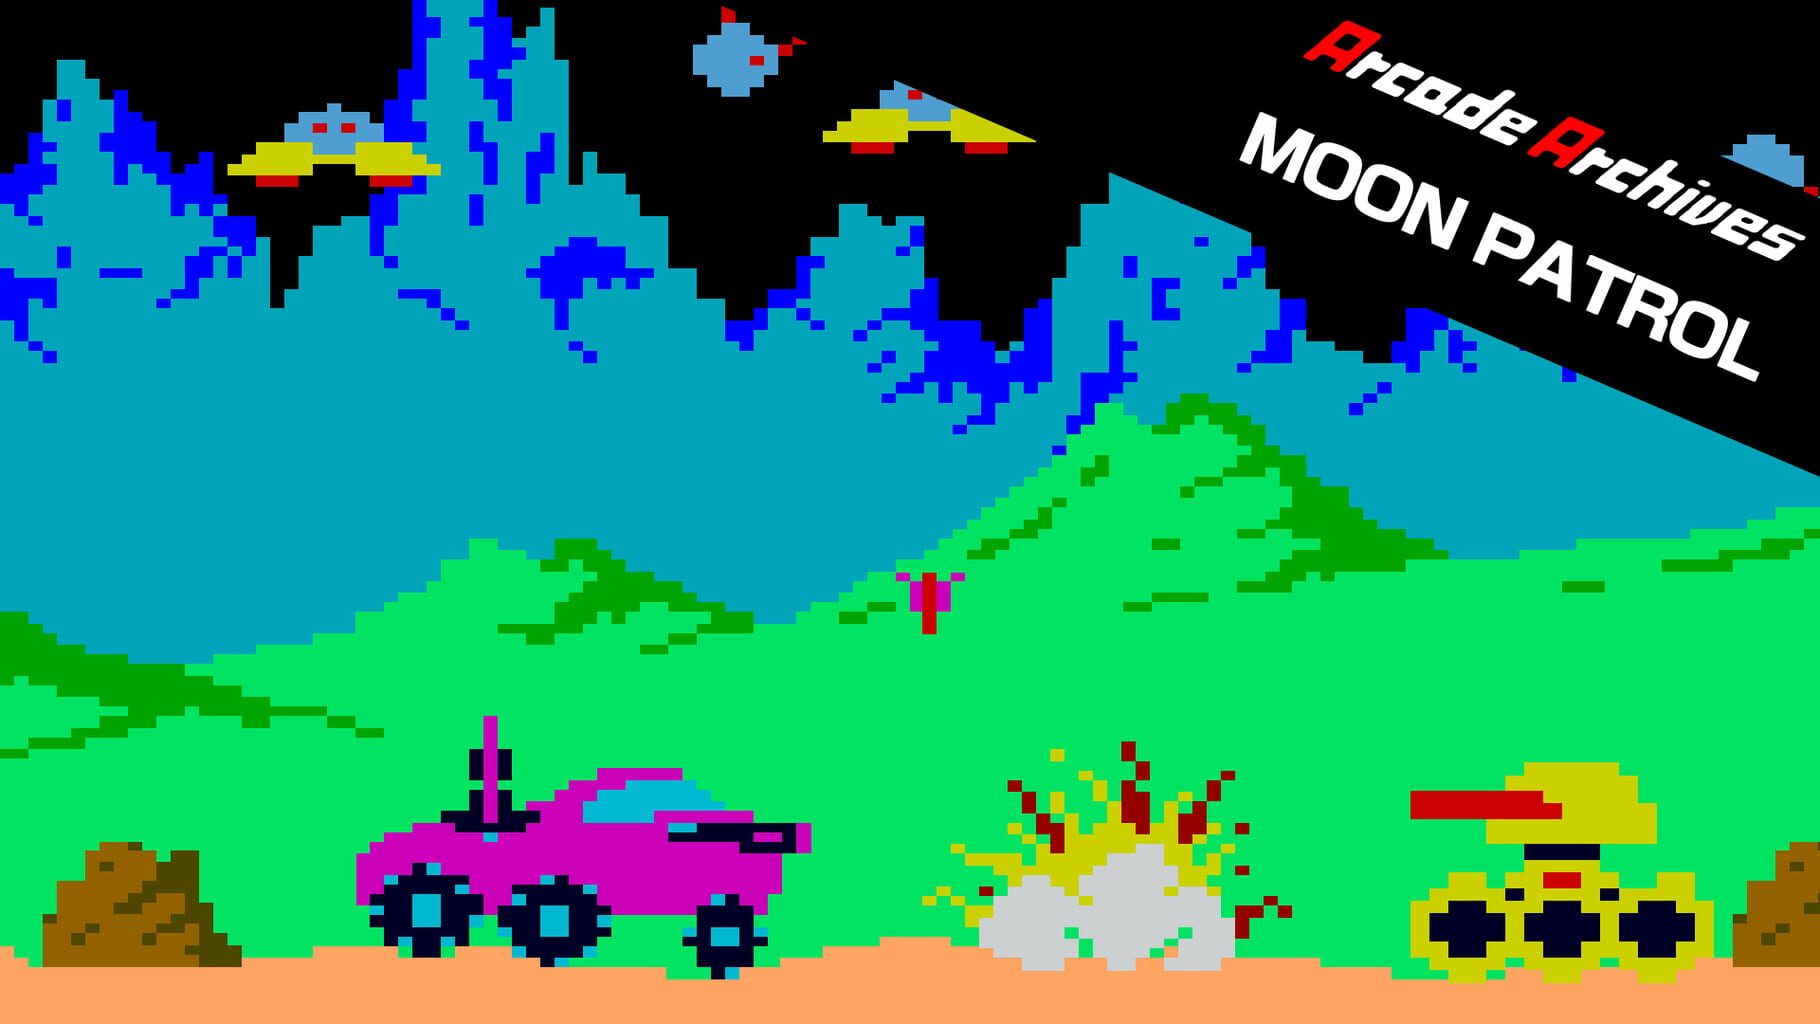 Arcade Archives: Moon Patrol artwork